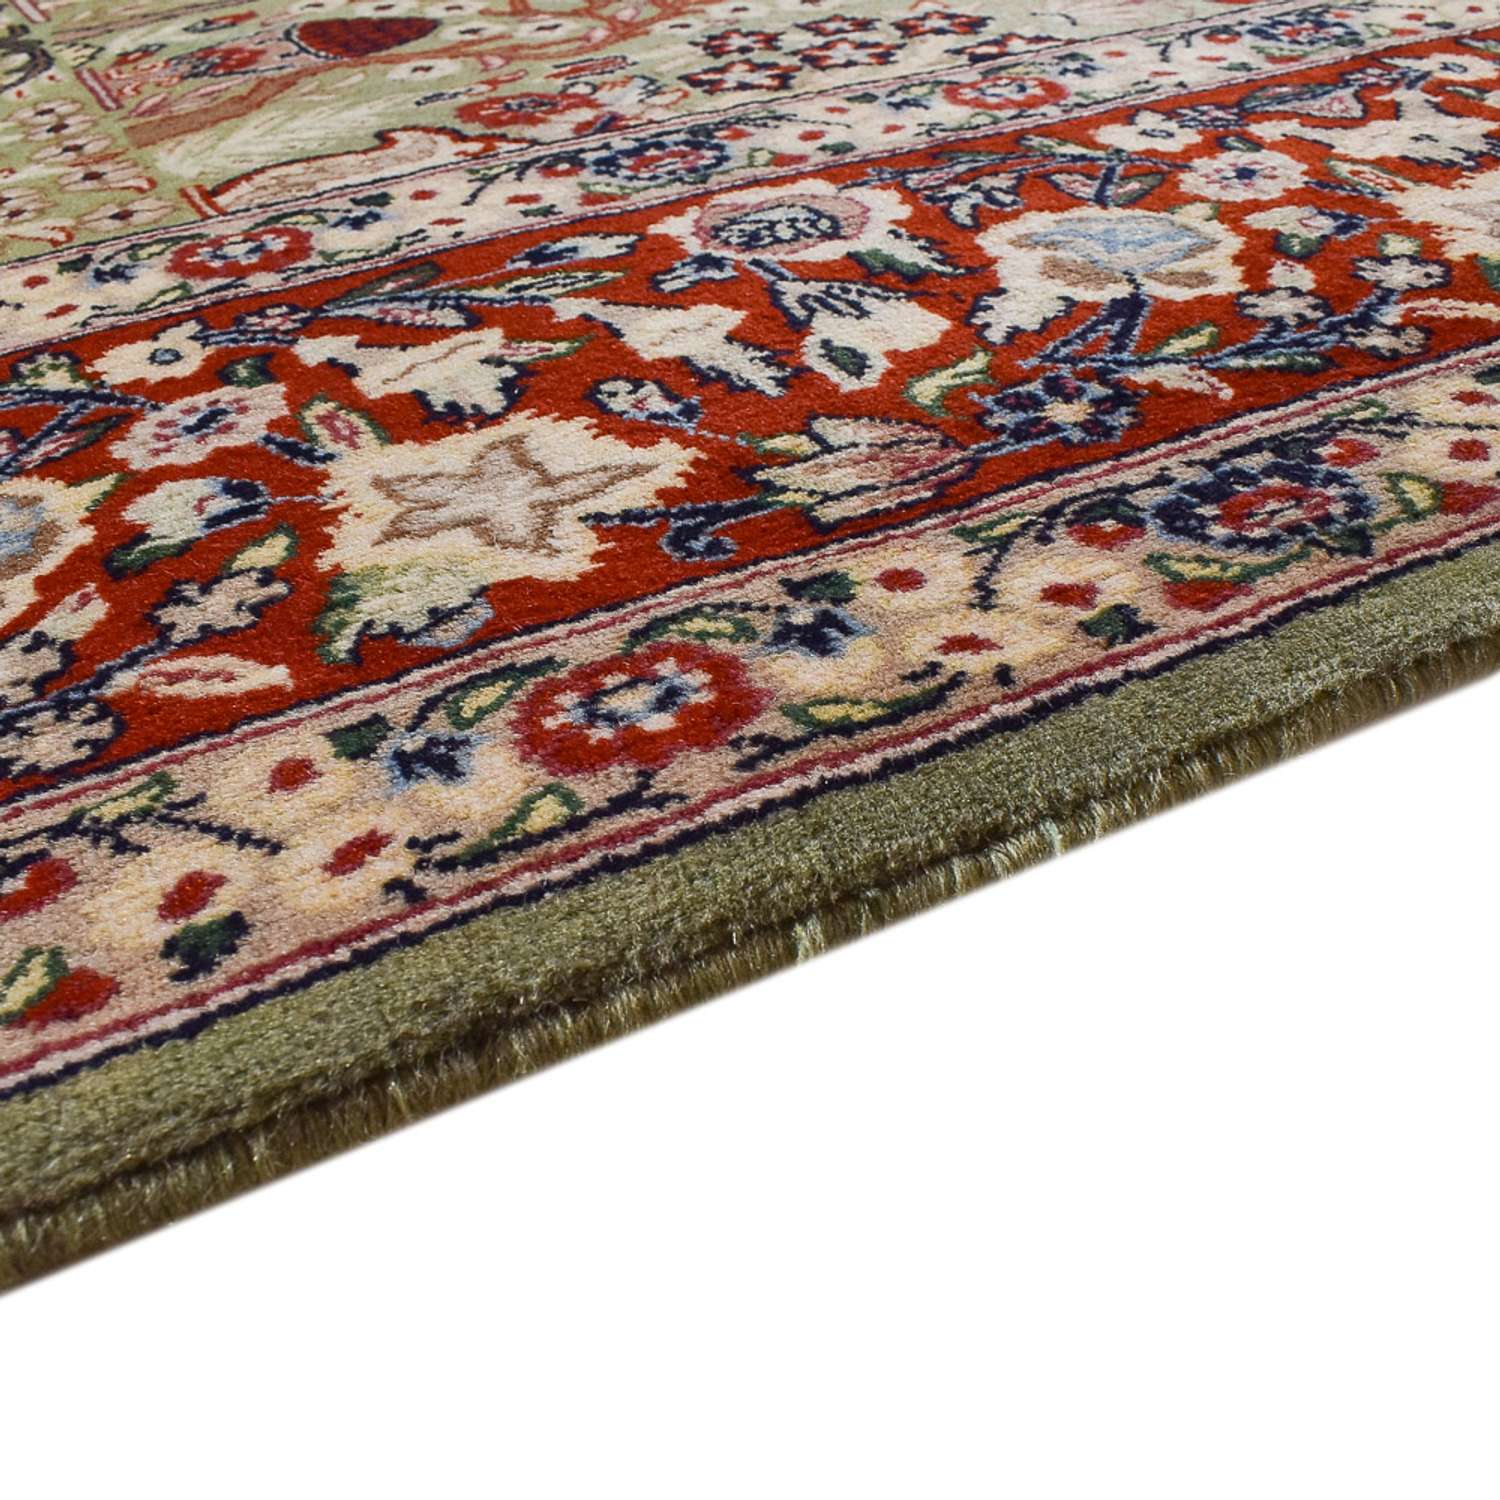 Perzisch tapijt - Keshan - 362 x 252 cm - zand